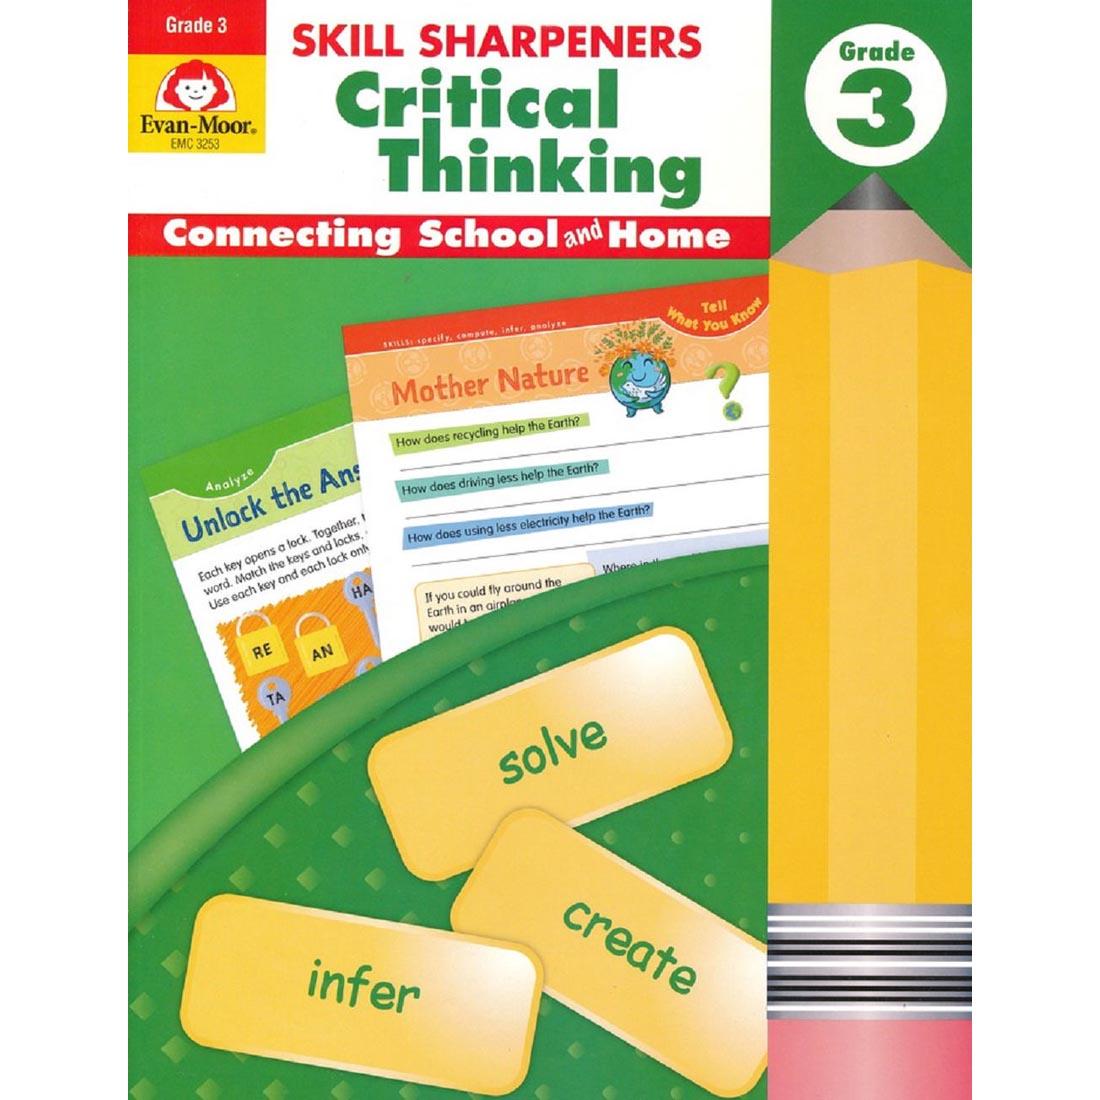 Skill Sharpeners Critical Thinking by Evan-Moor Grade 3